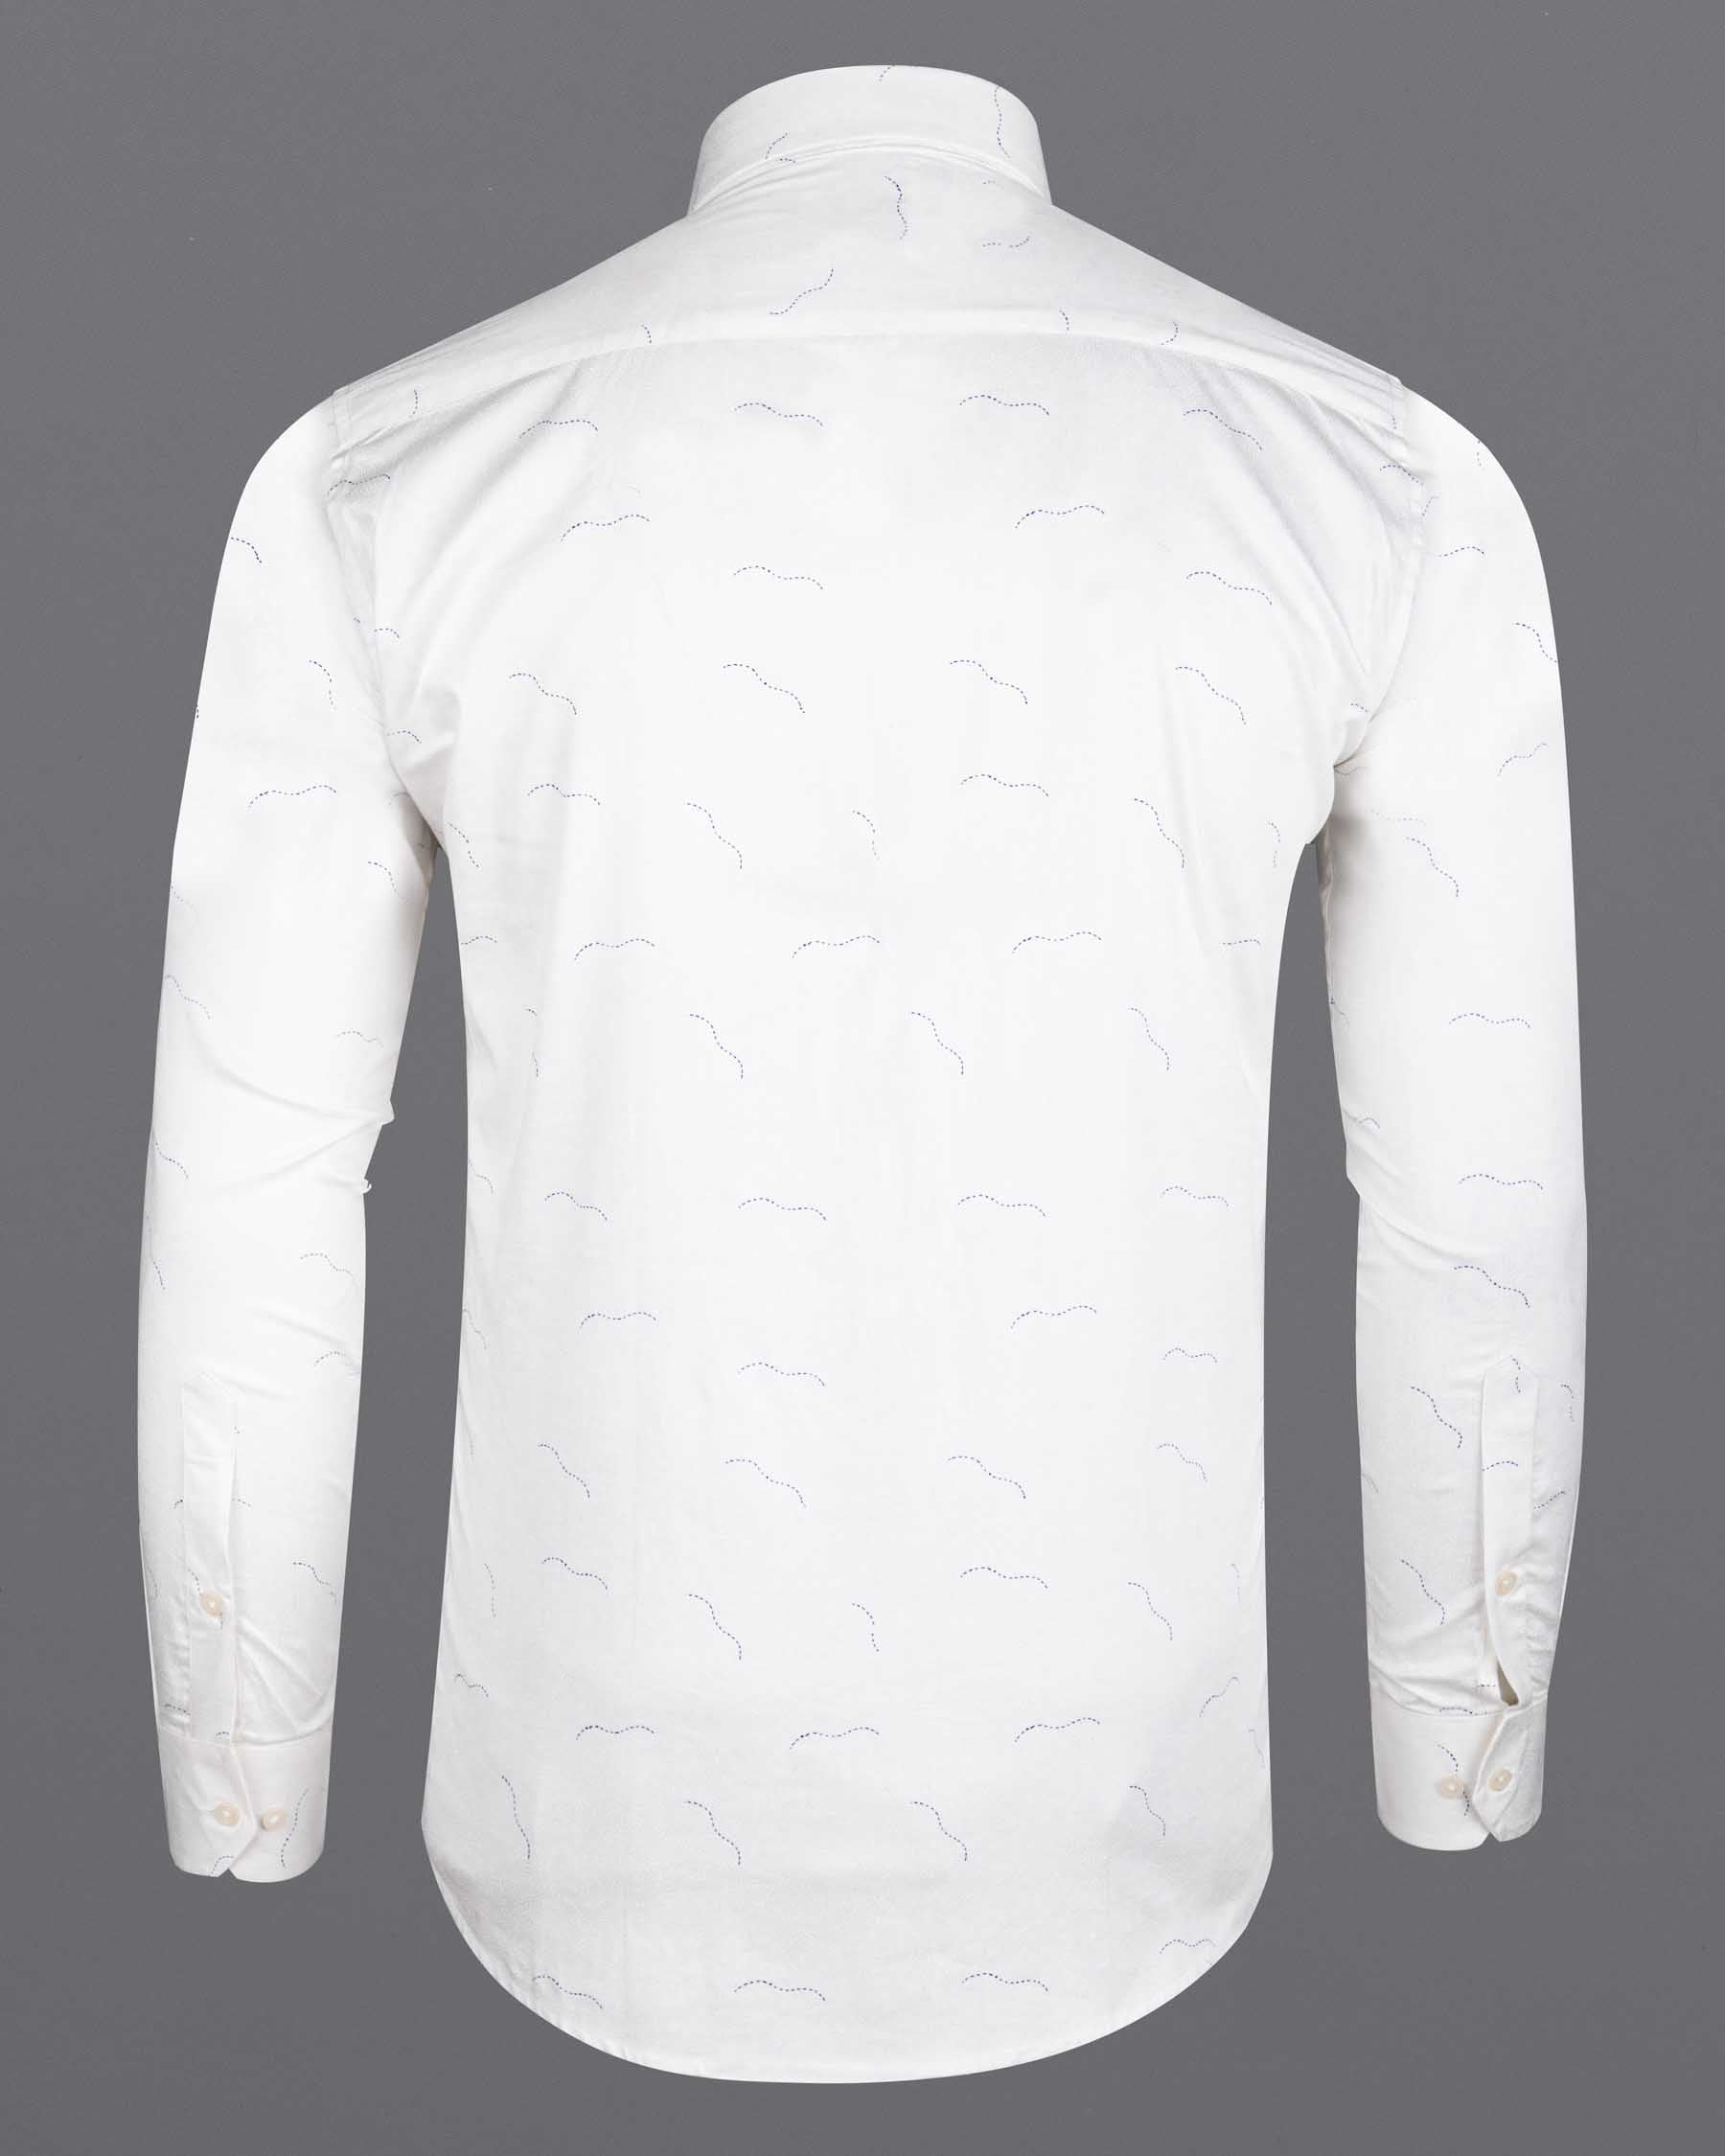 Bright White Arc Printed Super Soft Premium Cotton Shirt